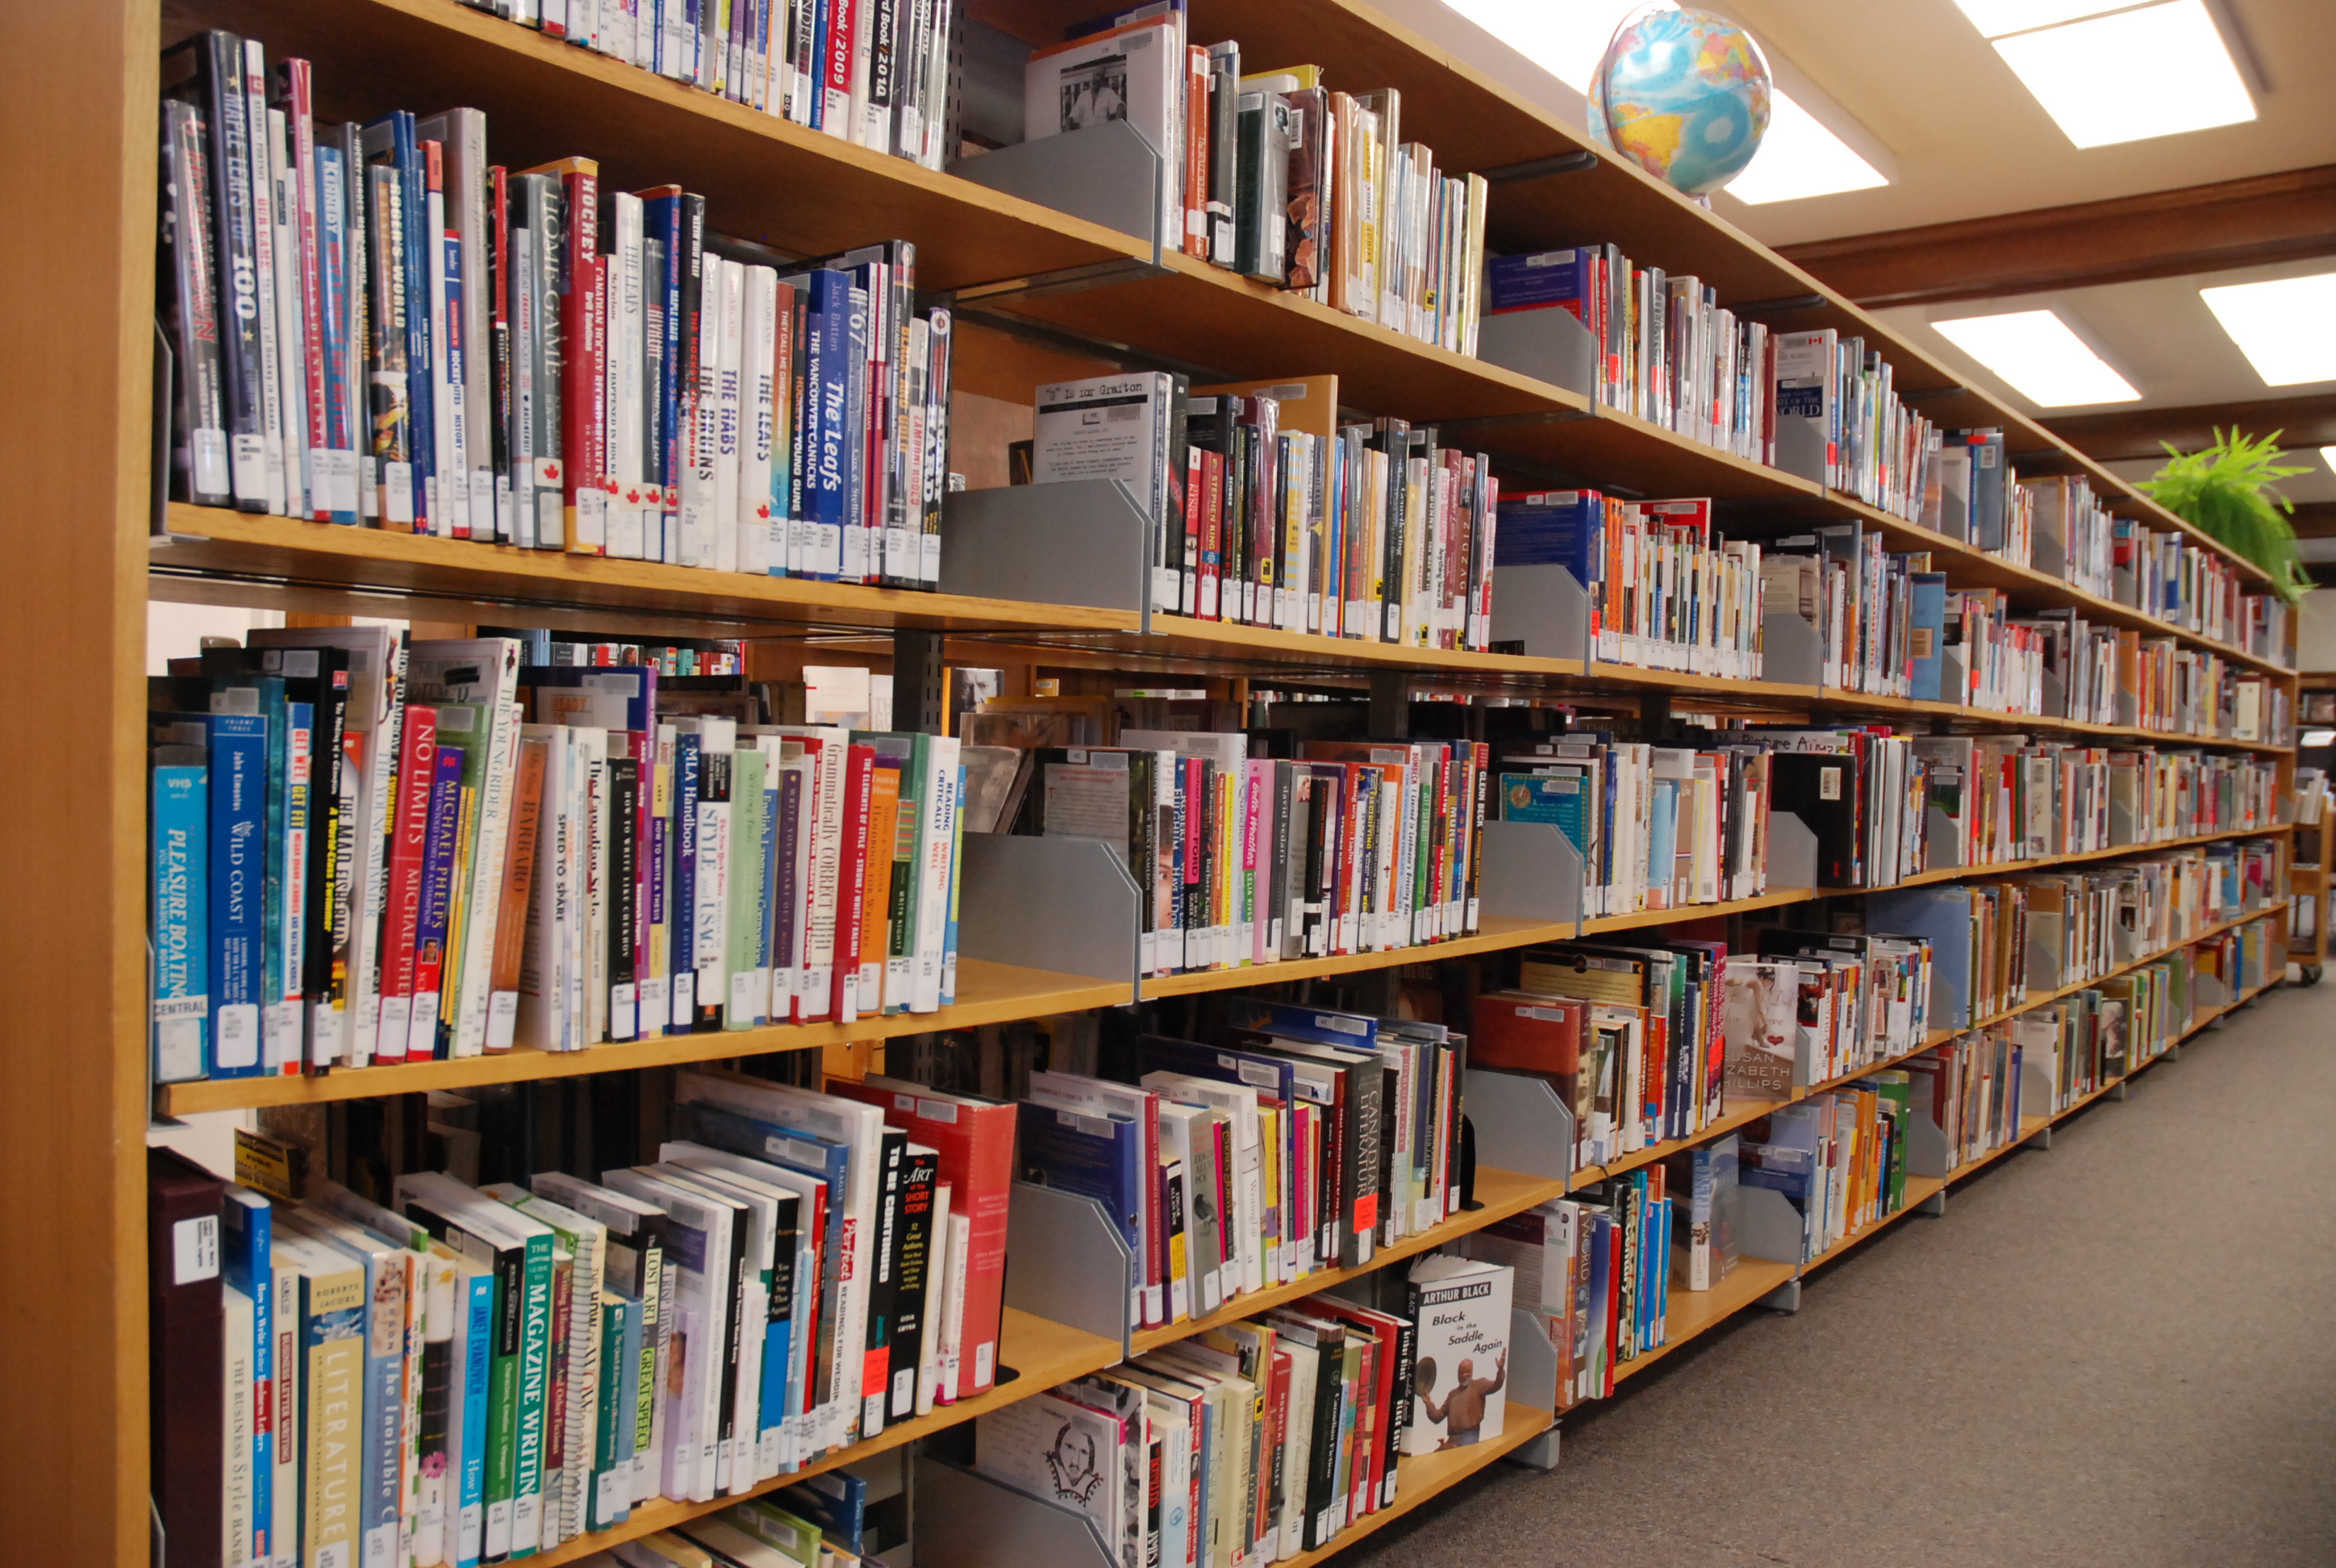 Libs collection. Библиотека. Библиотека фон. Библиотека 21 века. Школьная библиотека фото.